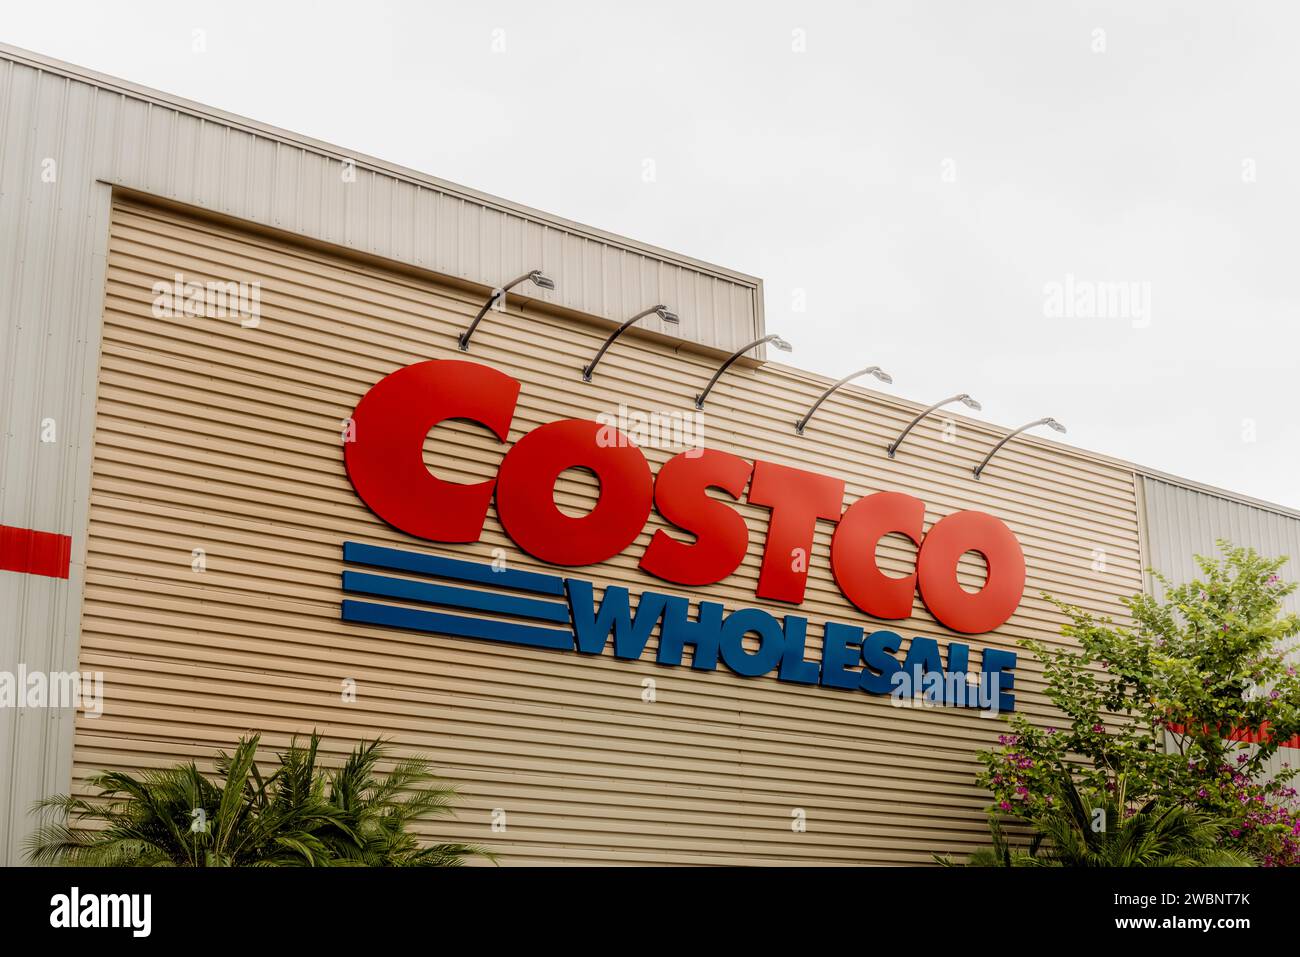 Costco Wholesale gas station in Puerto Vallarta Mexico Stock Photo